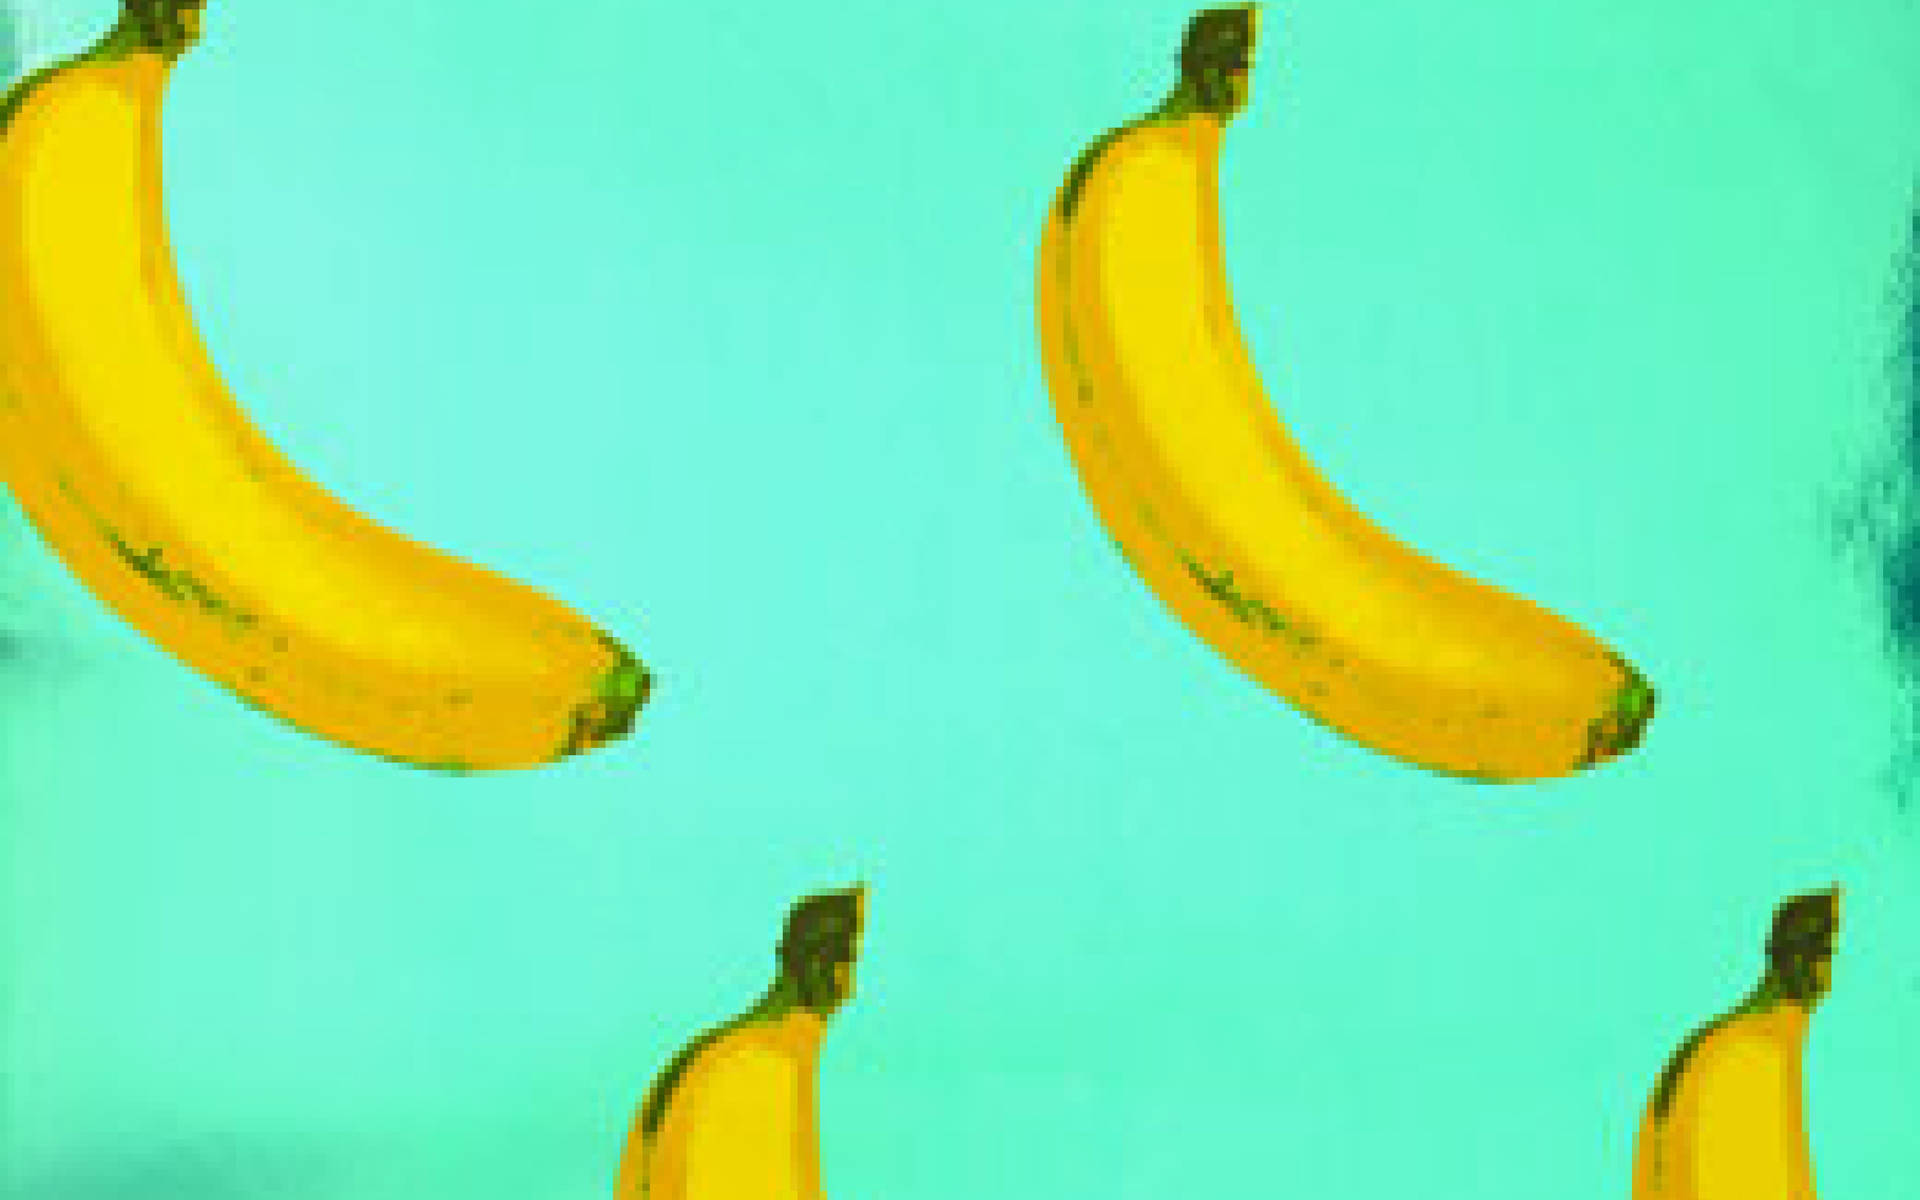 Banana 5120X3200 Wallpaper and Background Image